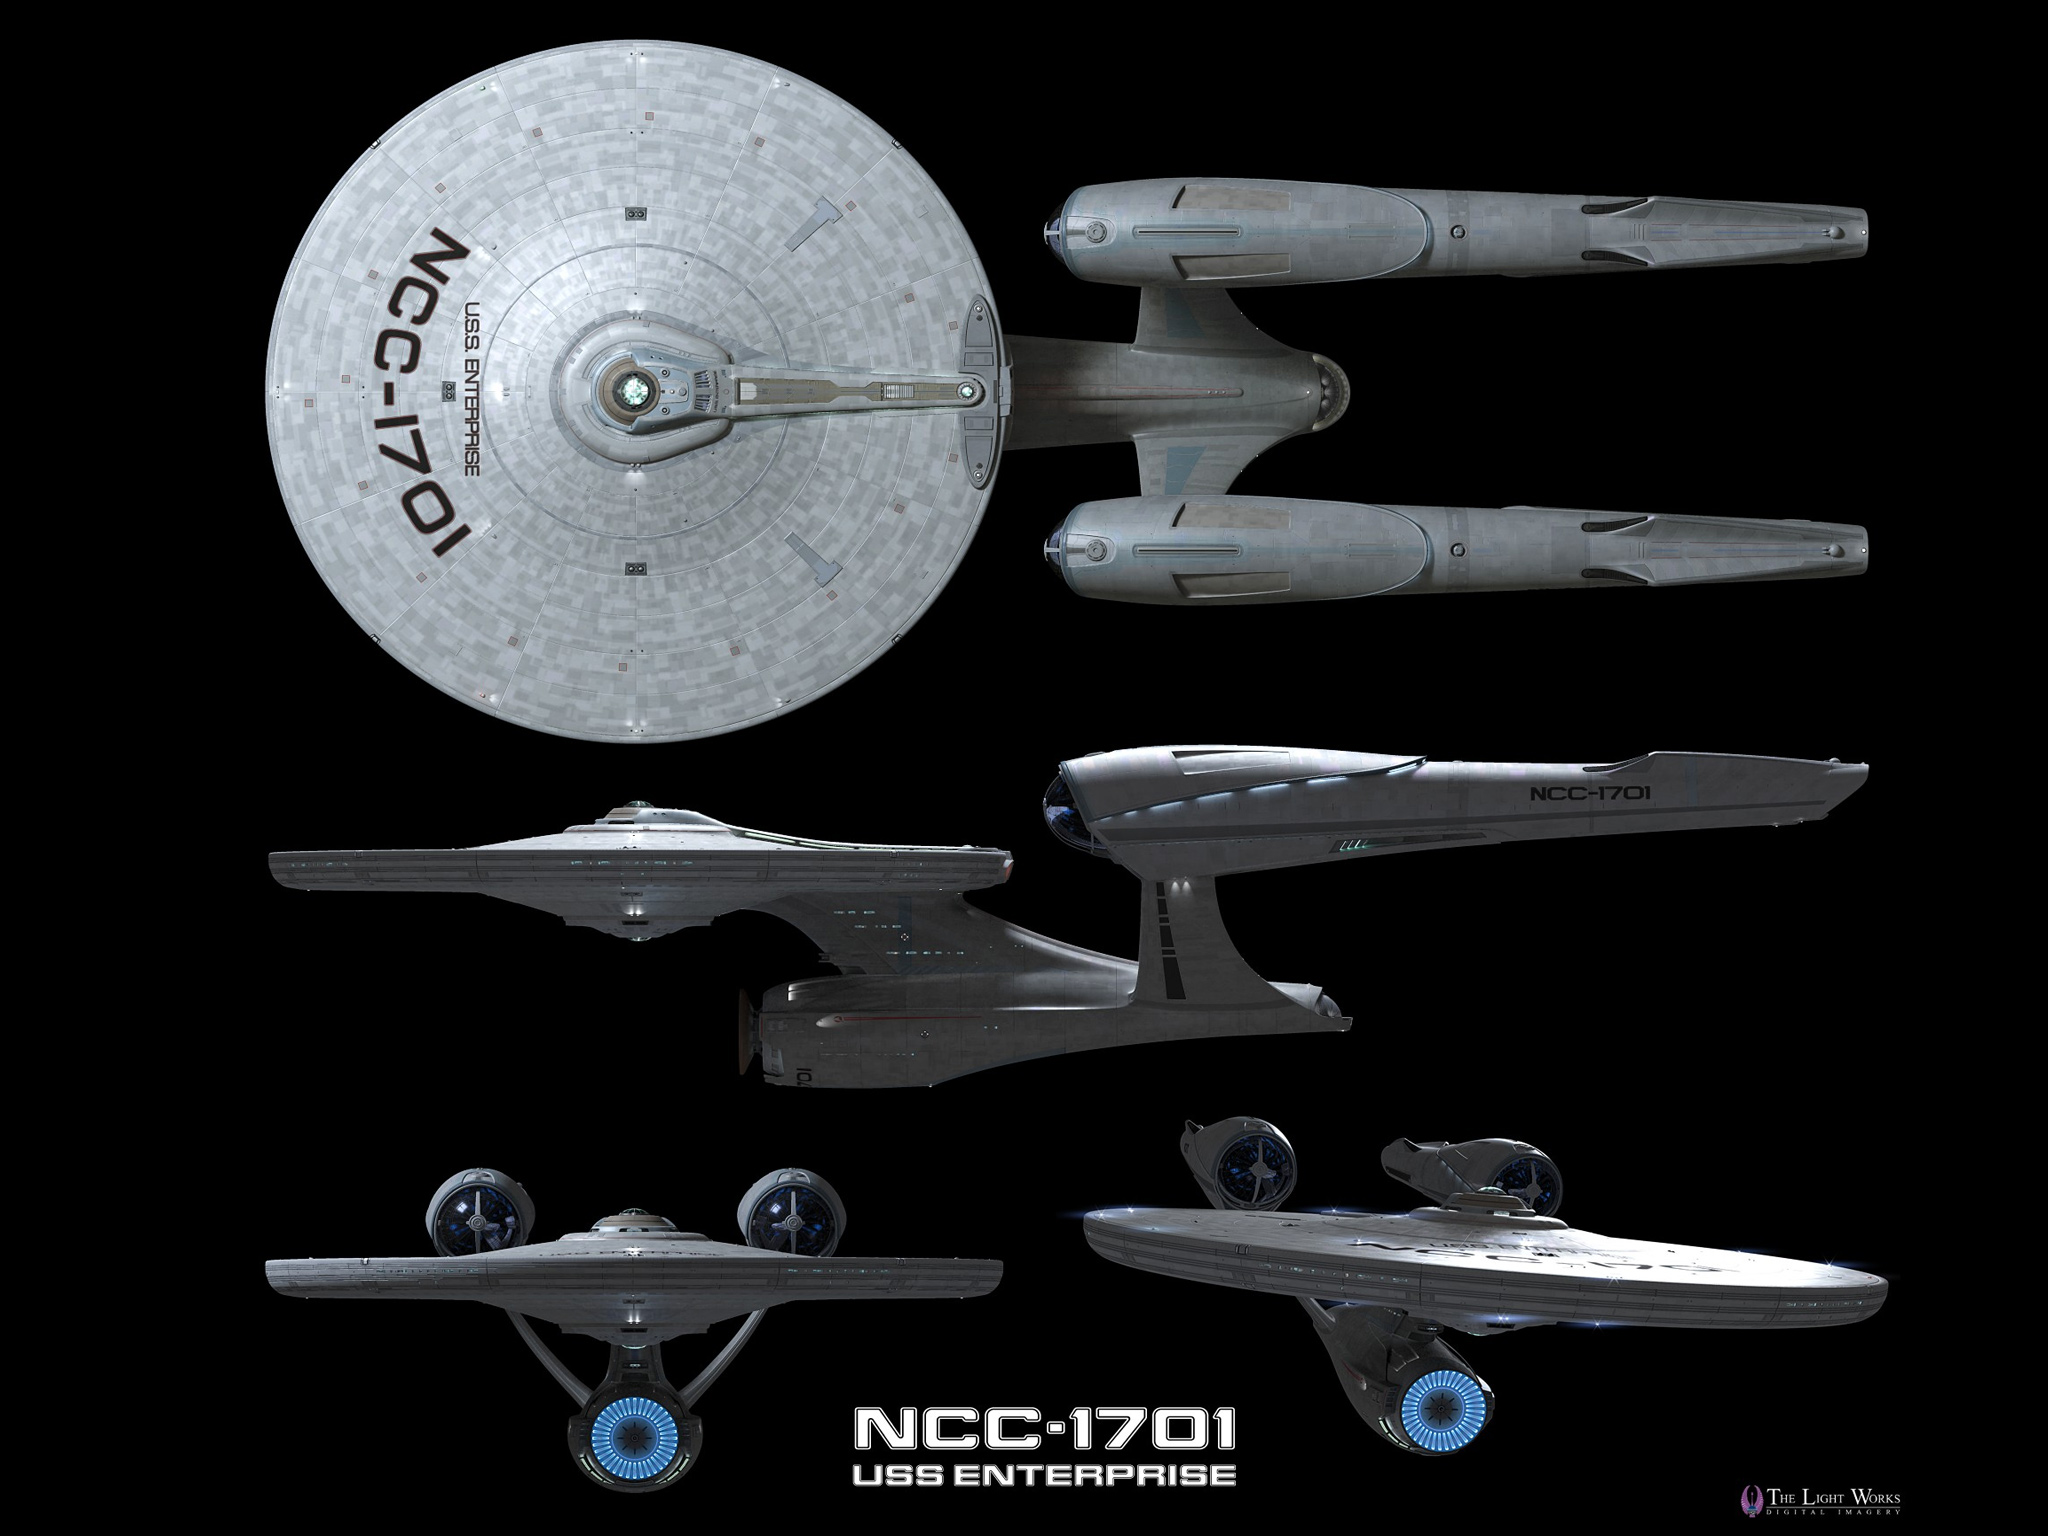 - Star Trek 3D Model USS Enterprise NCC1701 - free Star Trek computer desktop wallpaper, pictures, images.